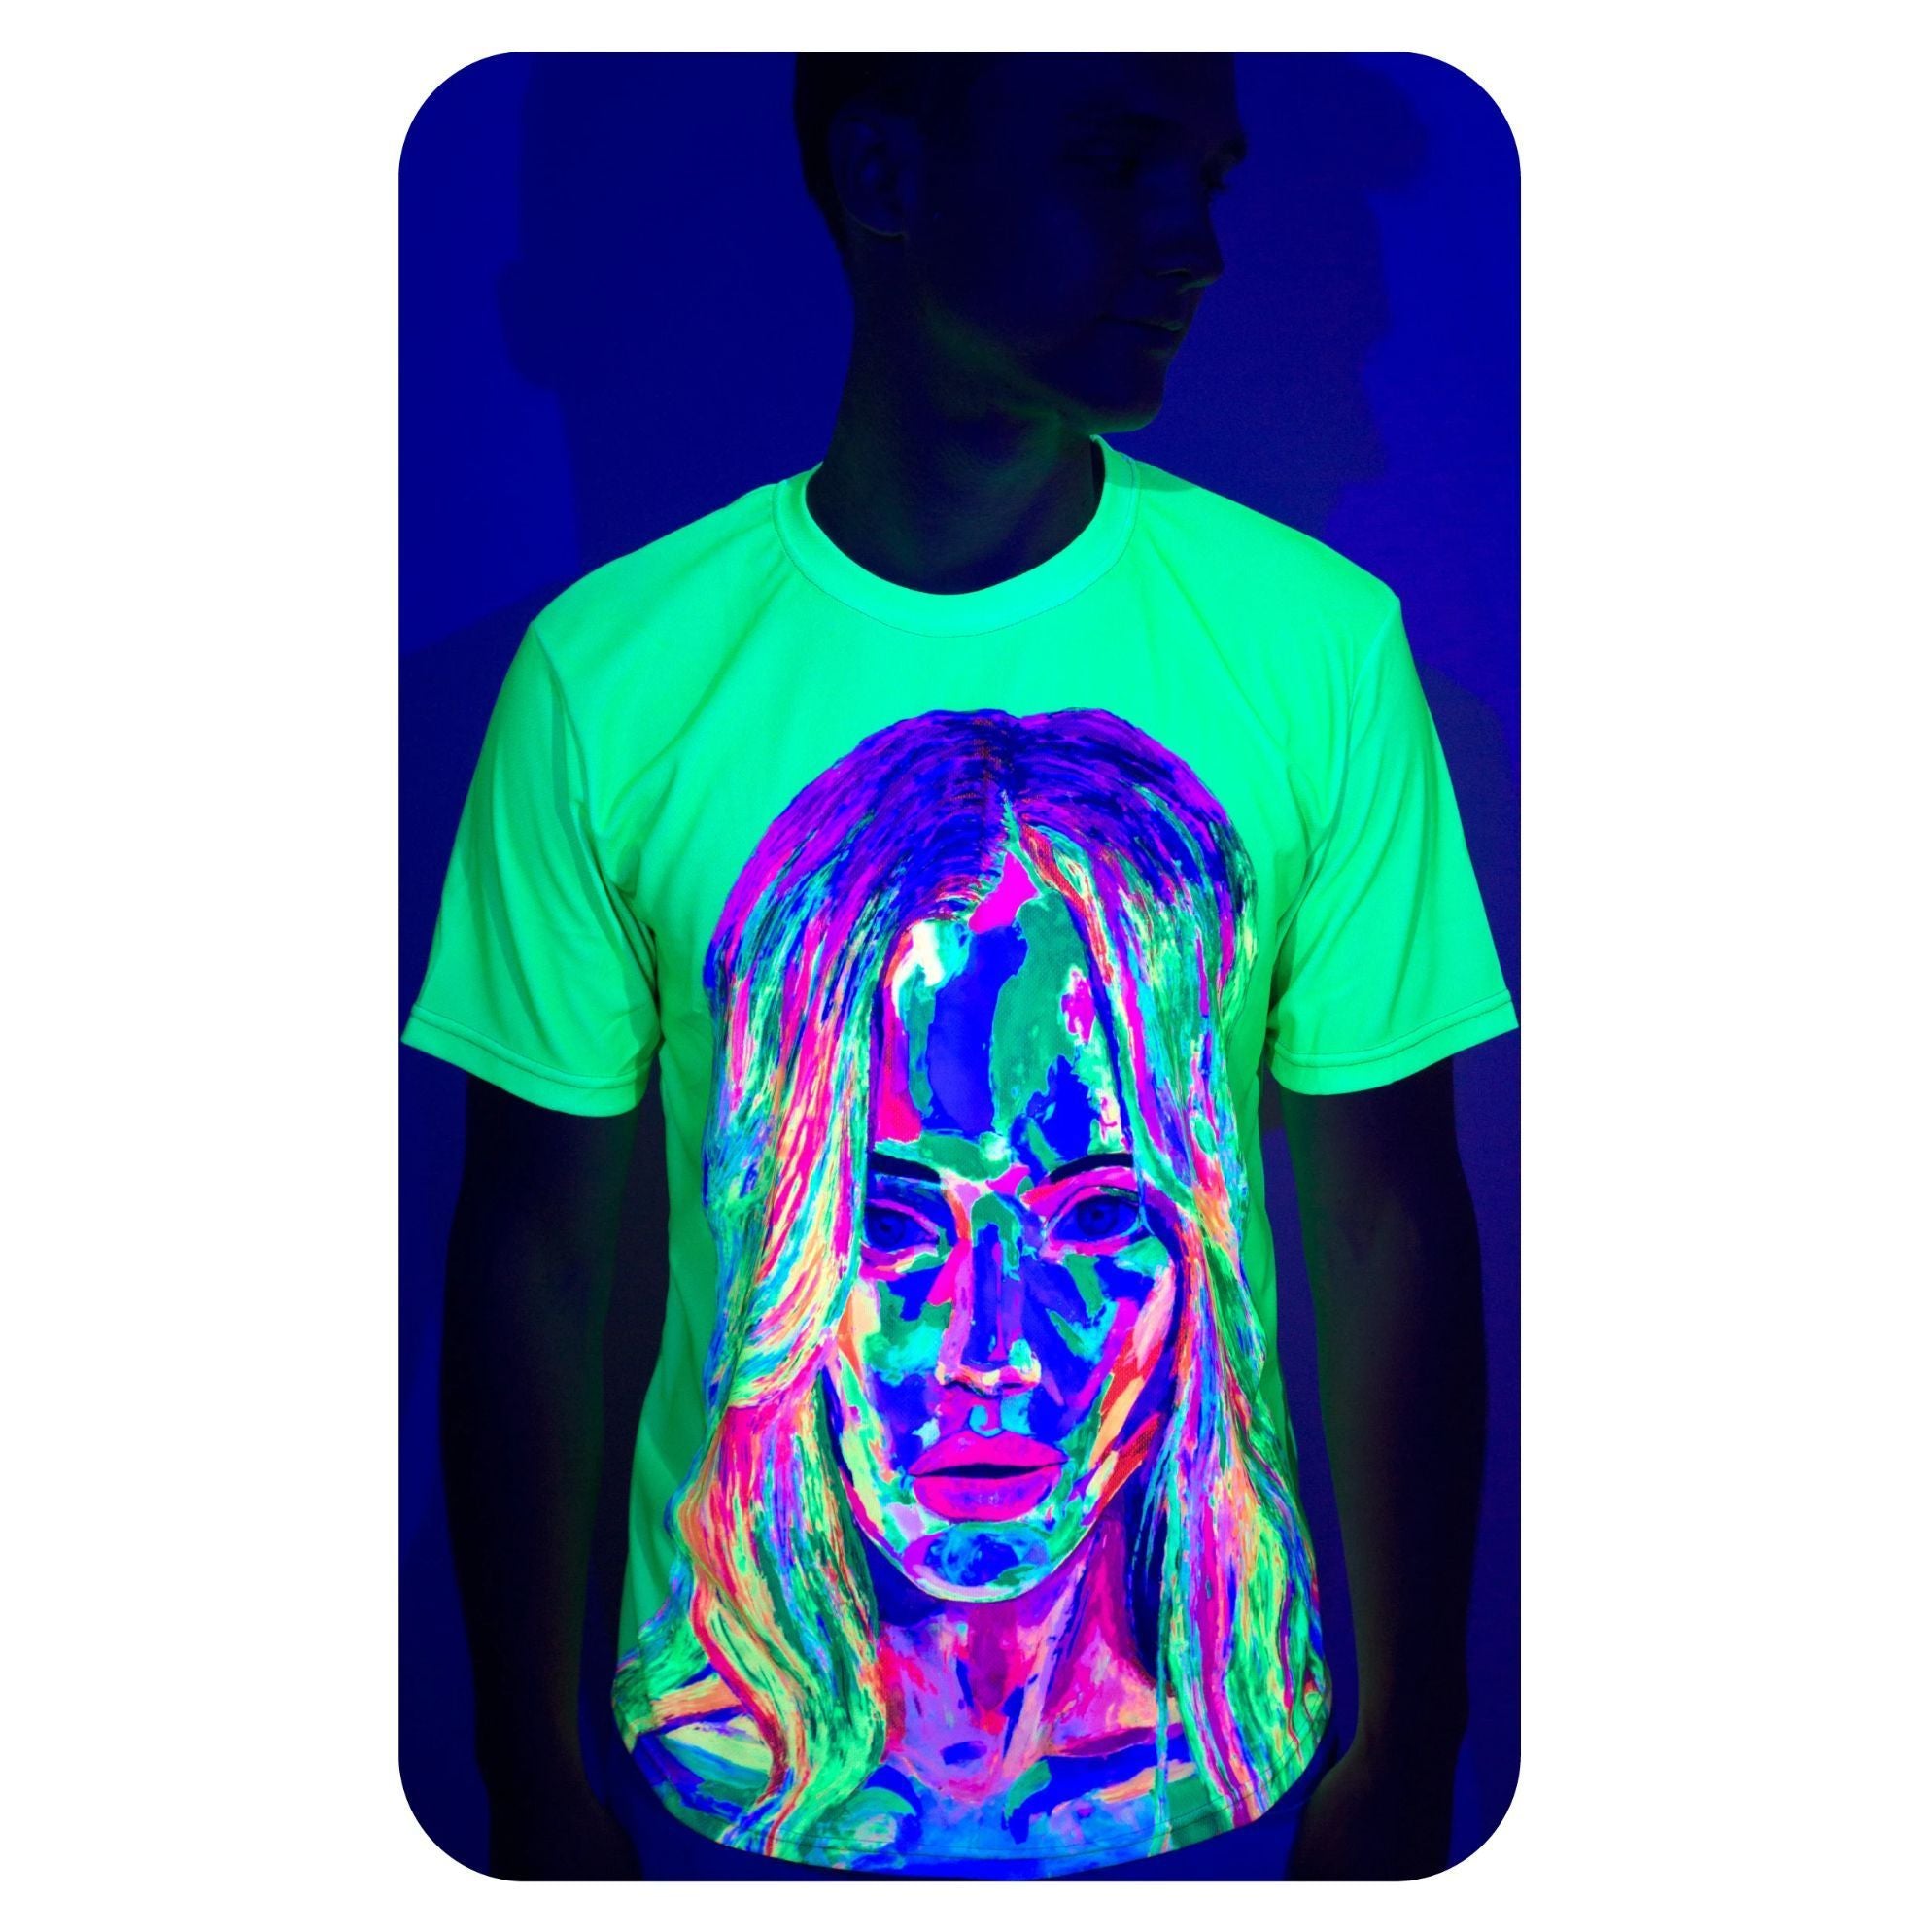 Acid Rave Shirt Men Glow in Ultraviolet Fluorescent Obramovich ts11